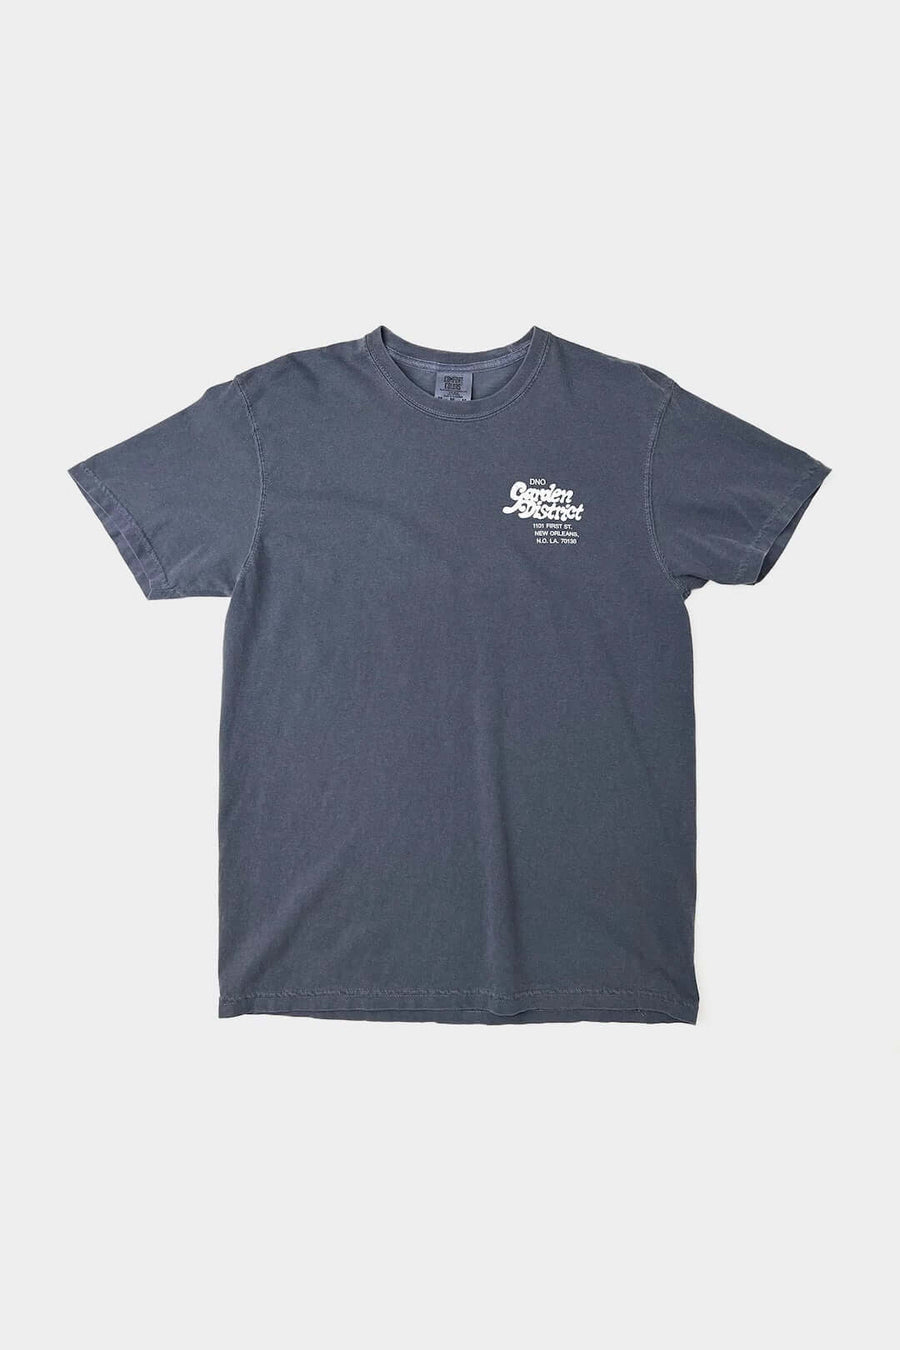 GD Shop T-Shirt - DNO